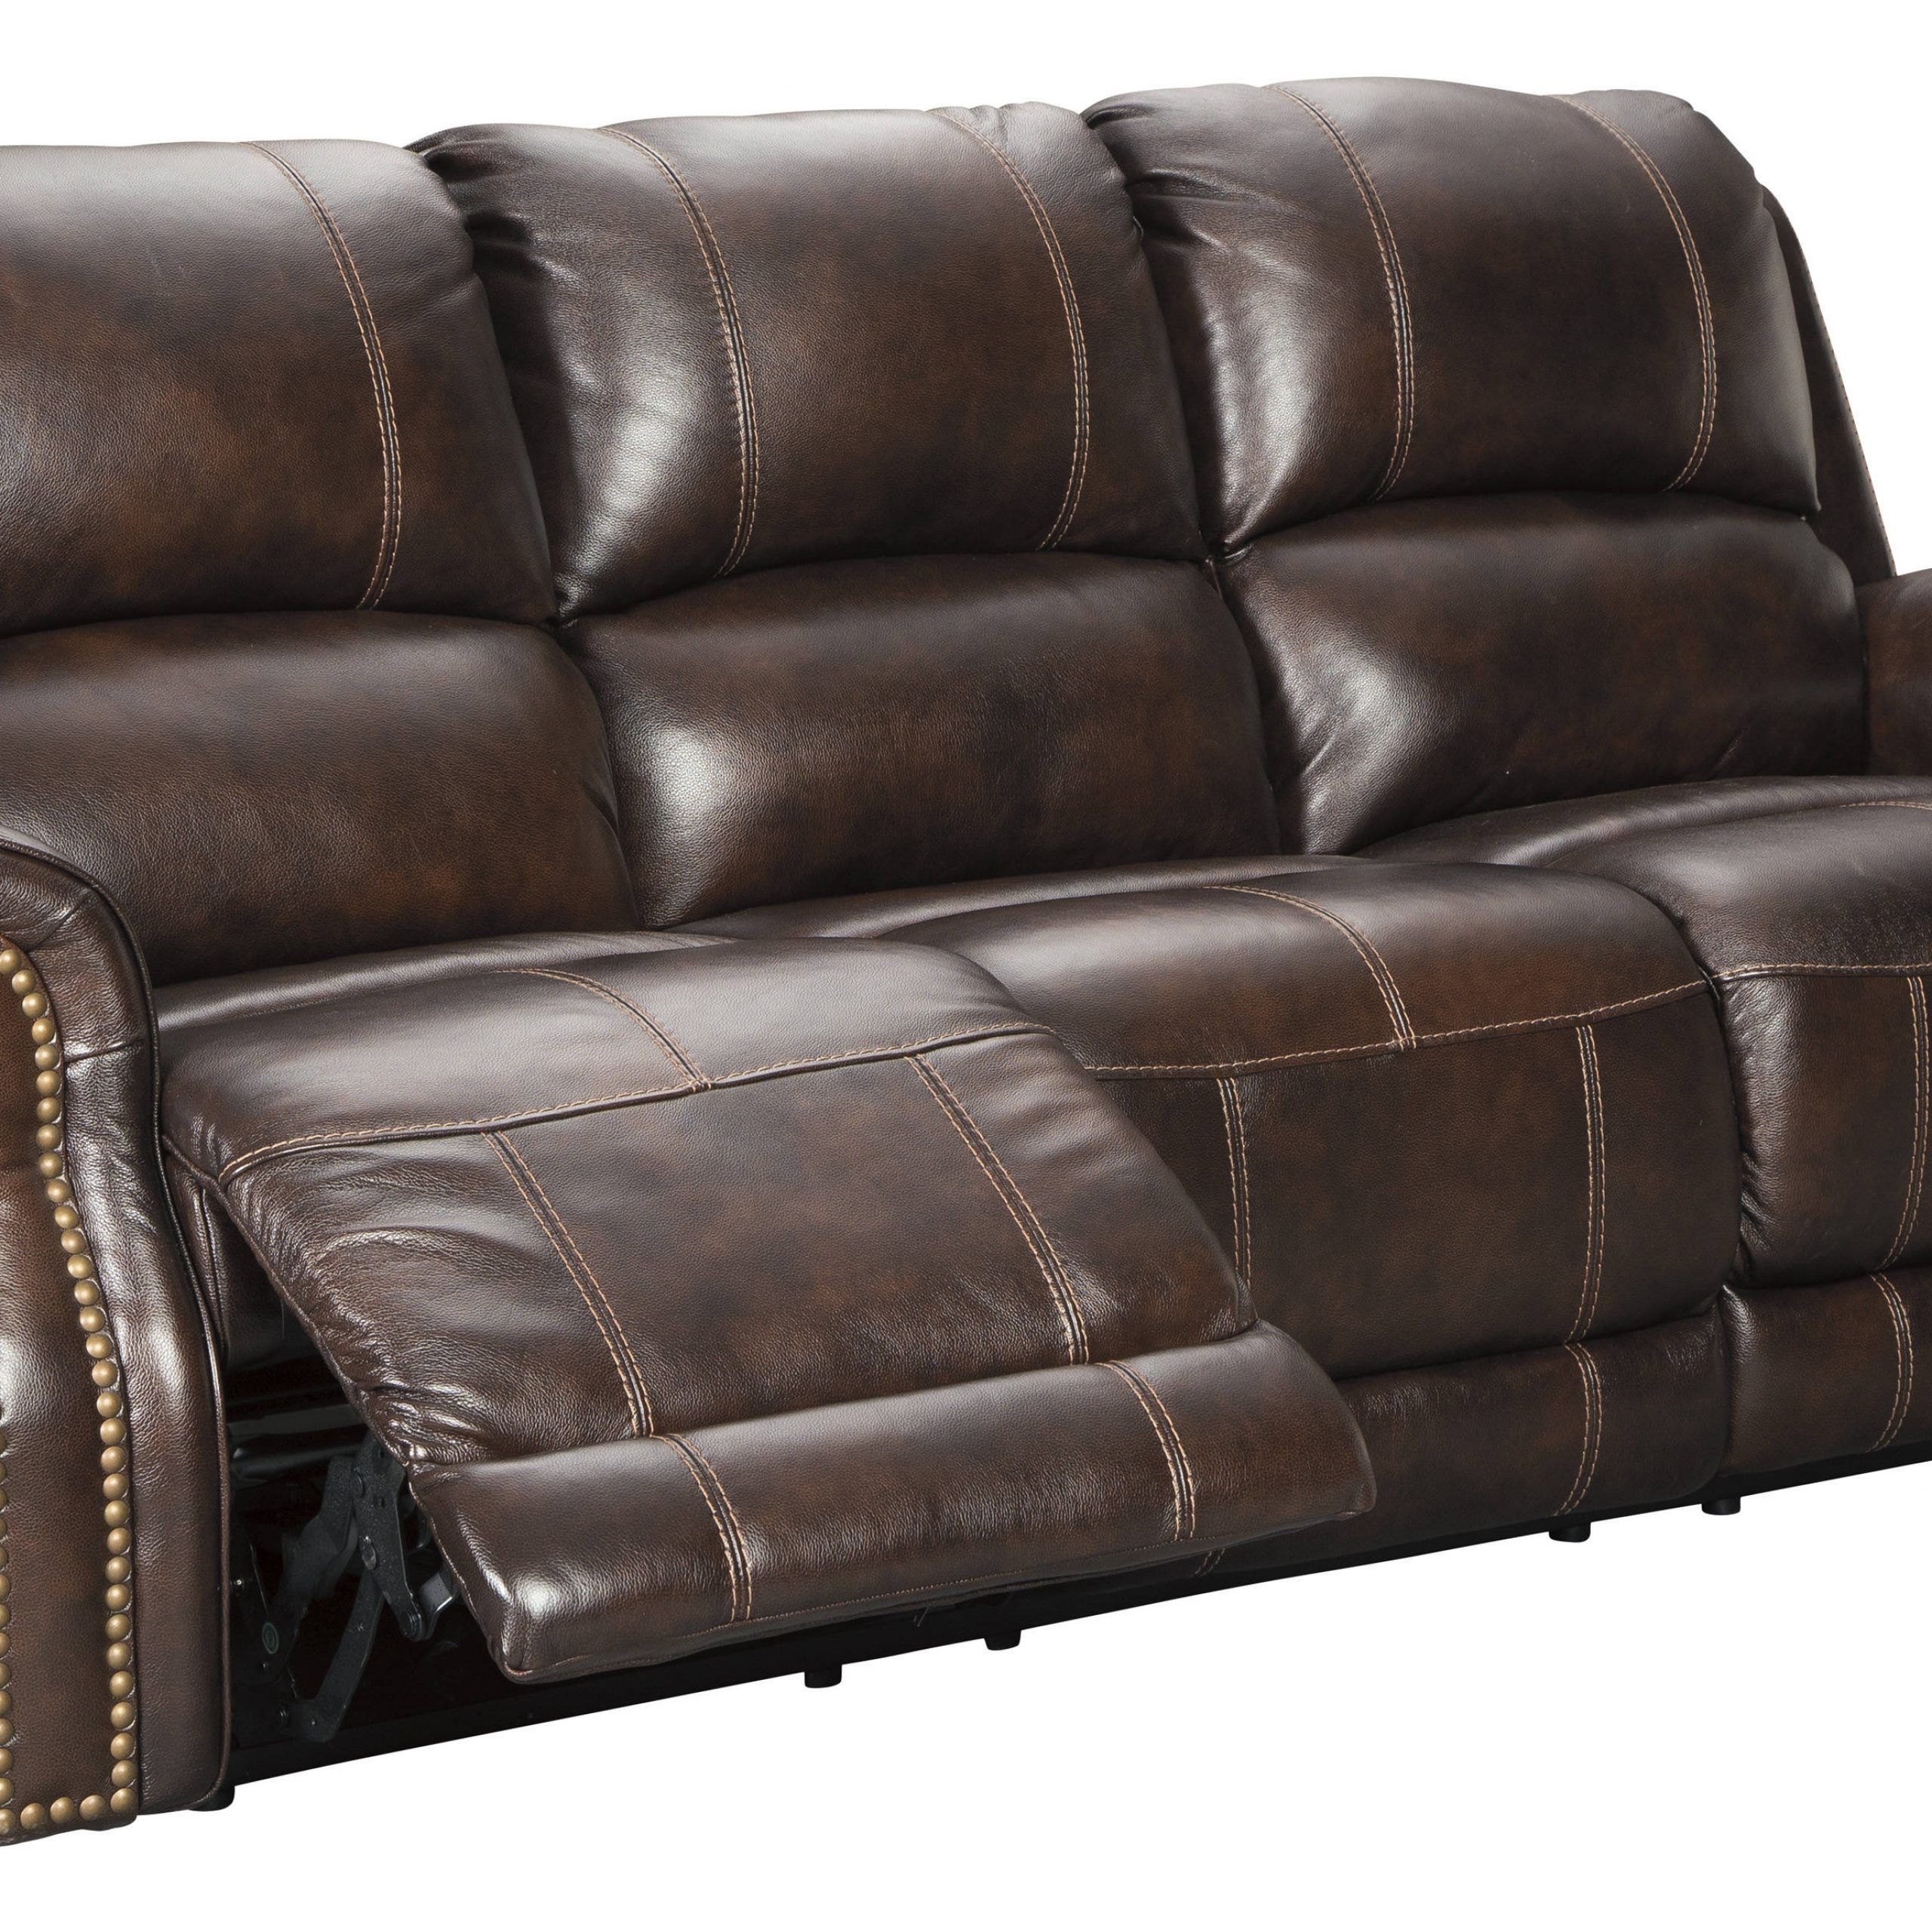 Ashley Furniture Buncrana Power Reclining Sofa With Within Raven Power Reclining Sofas (View 7 of 15)